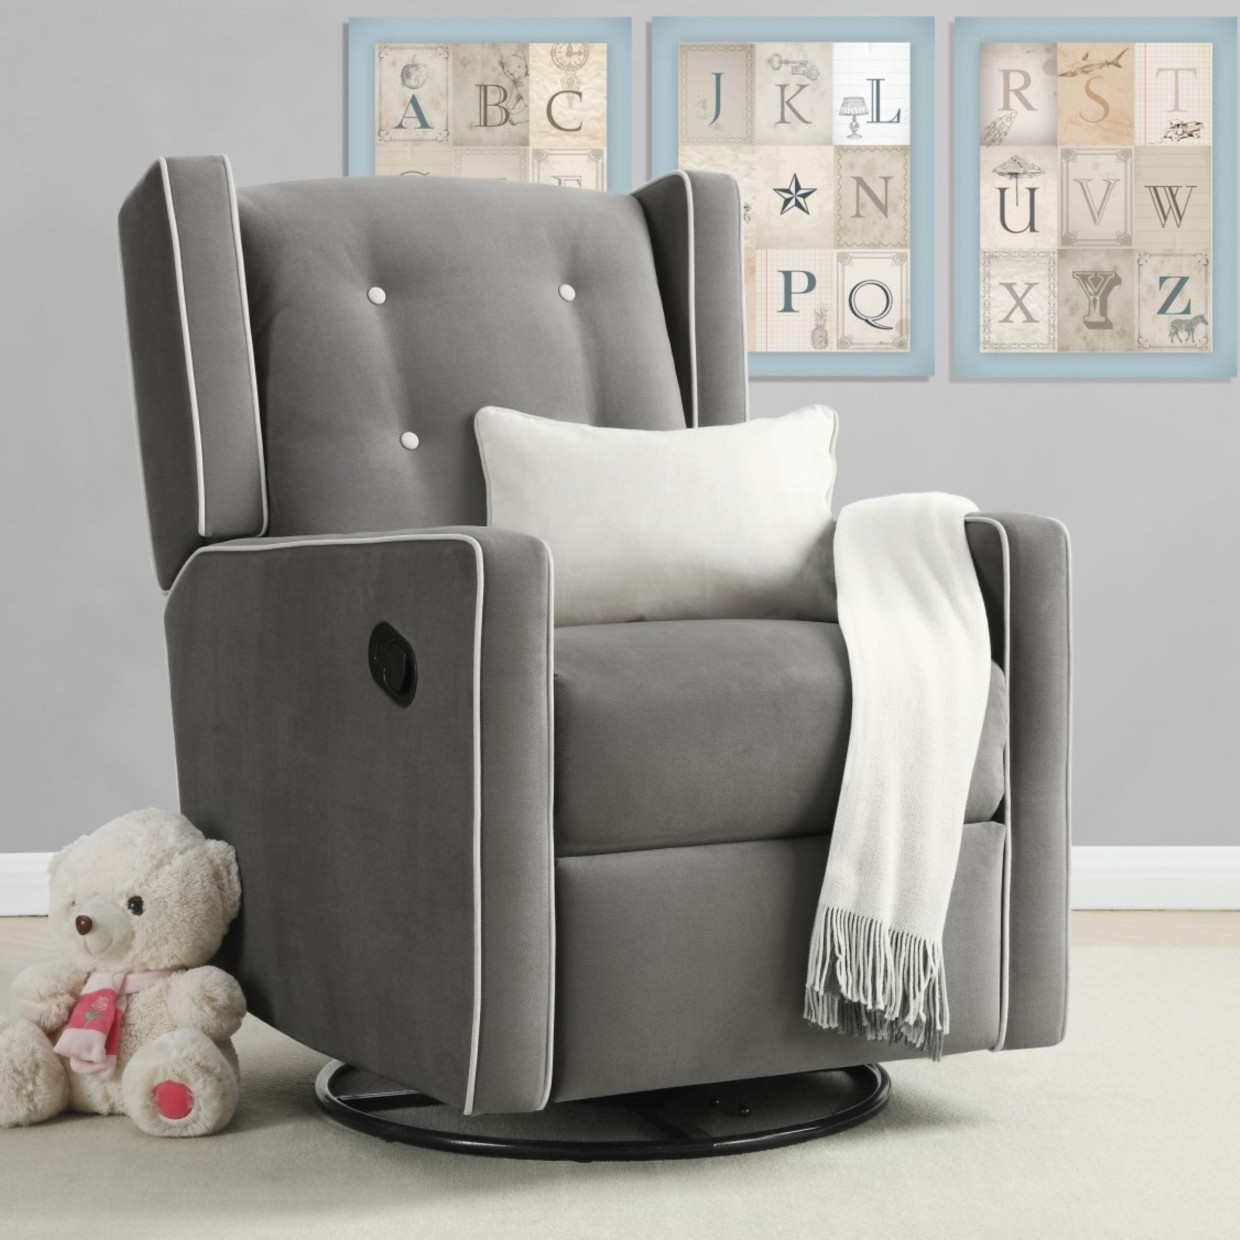 Baby Relax Mikayla Swivel Glider Rocker Recliner Chair - Gray Microfiber.